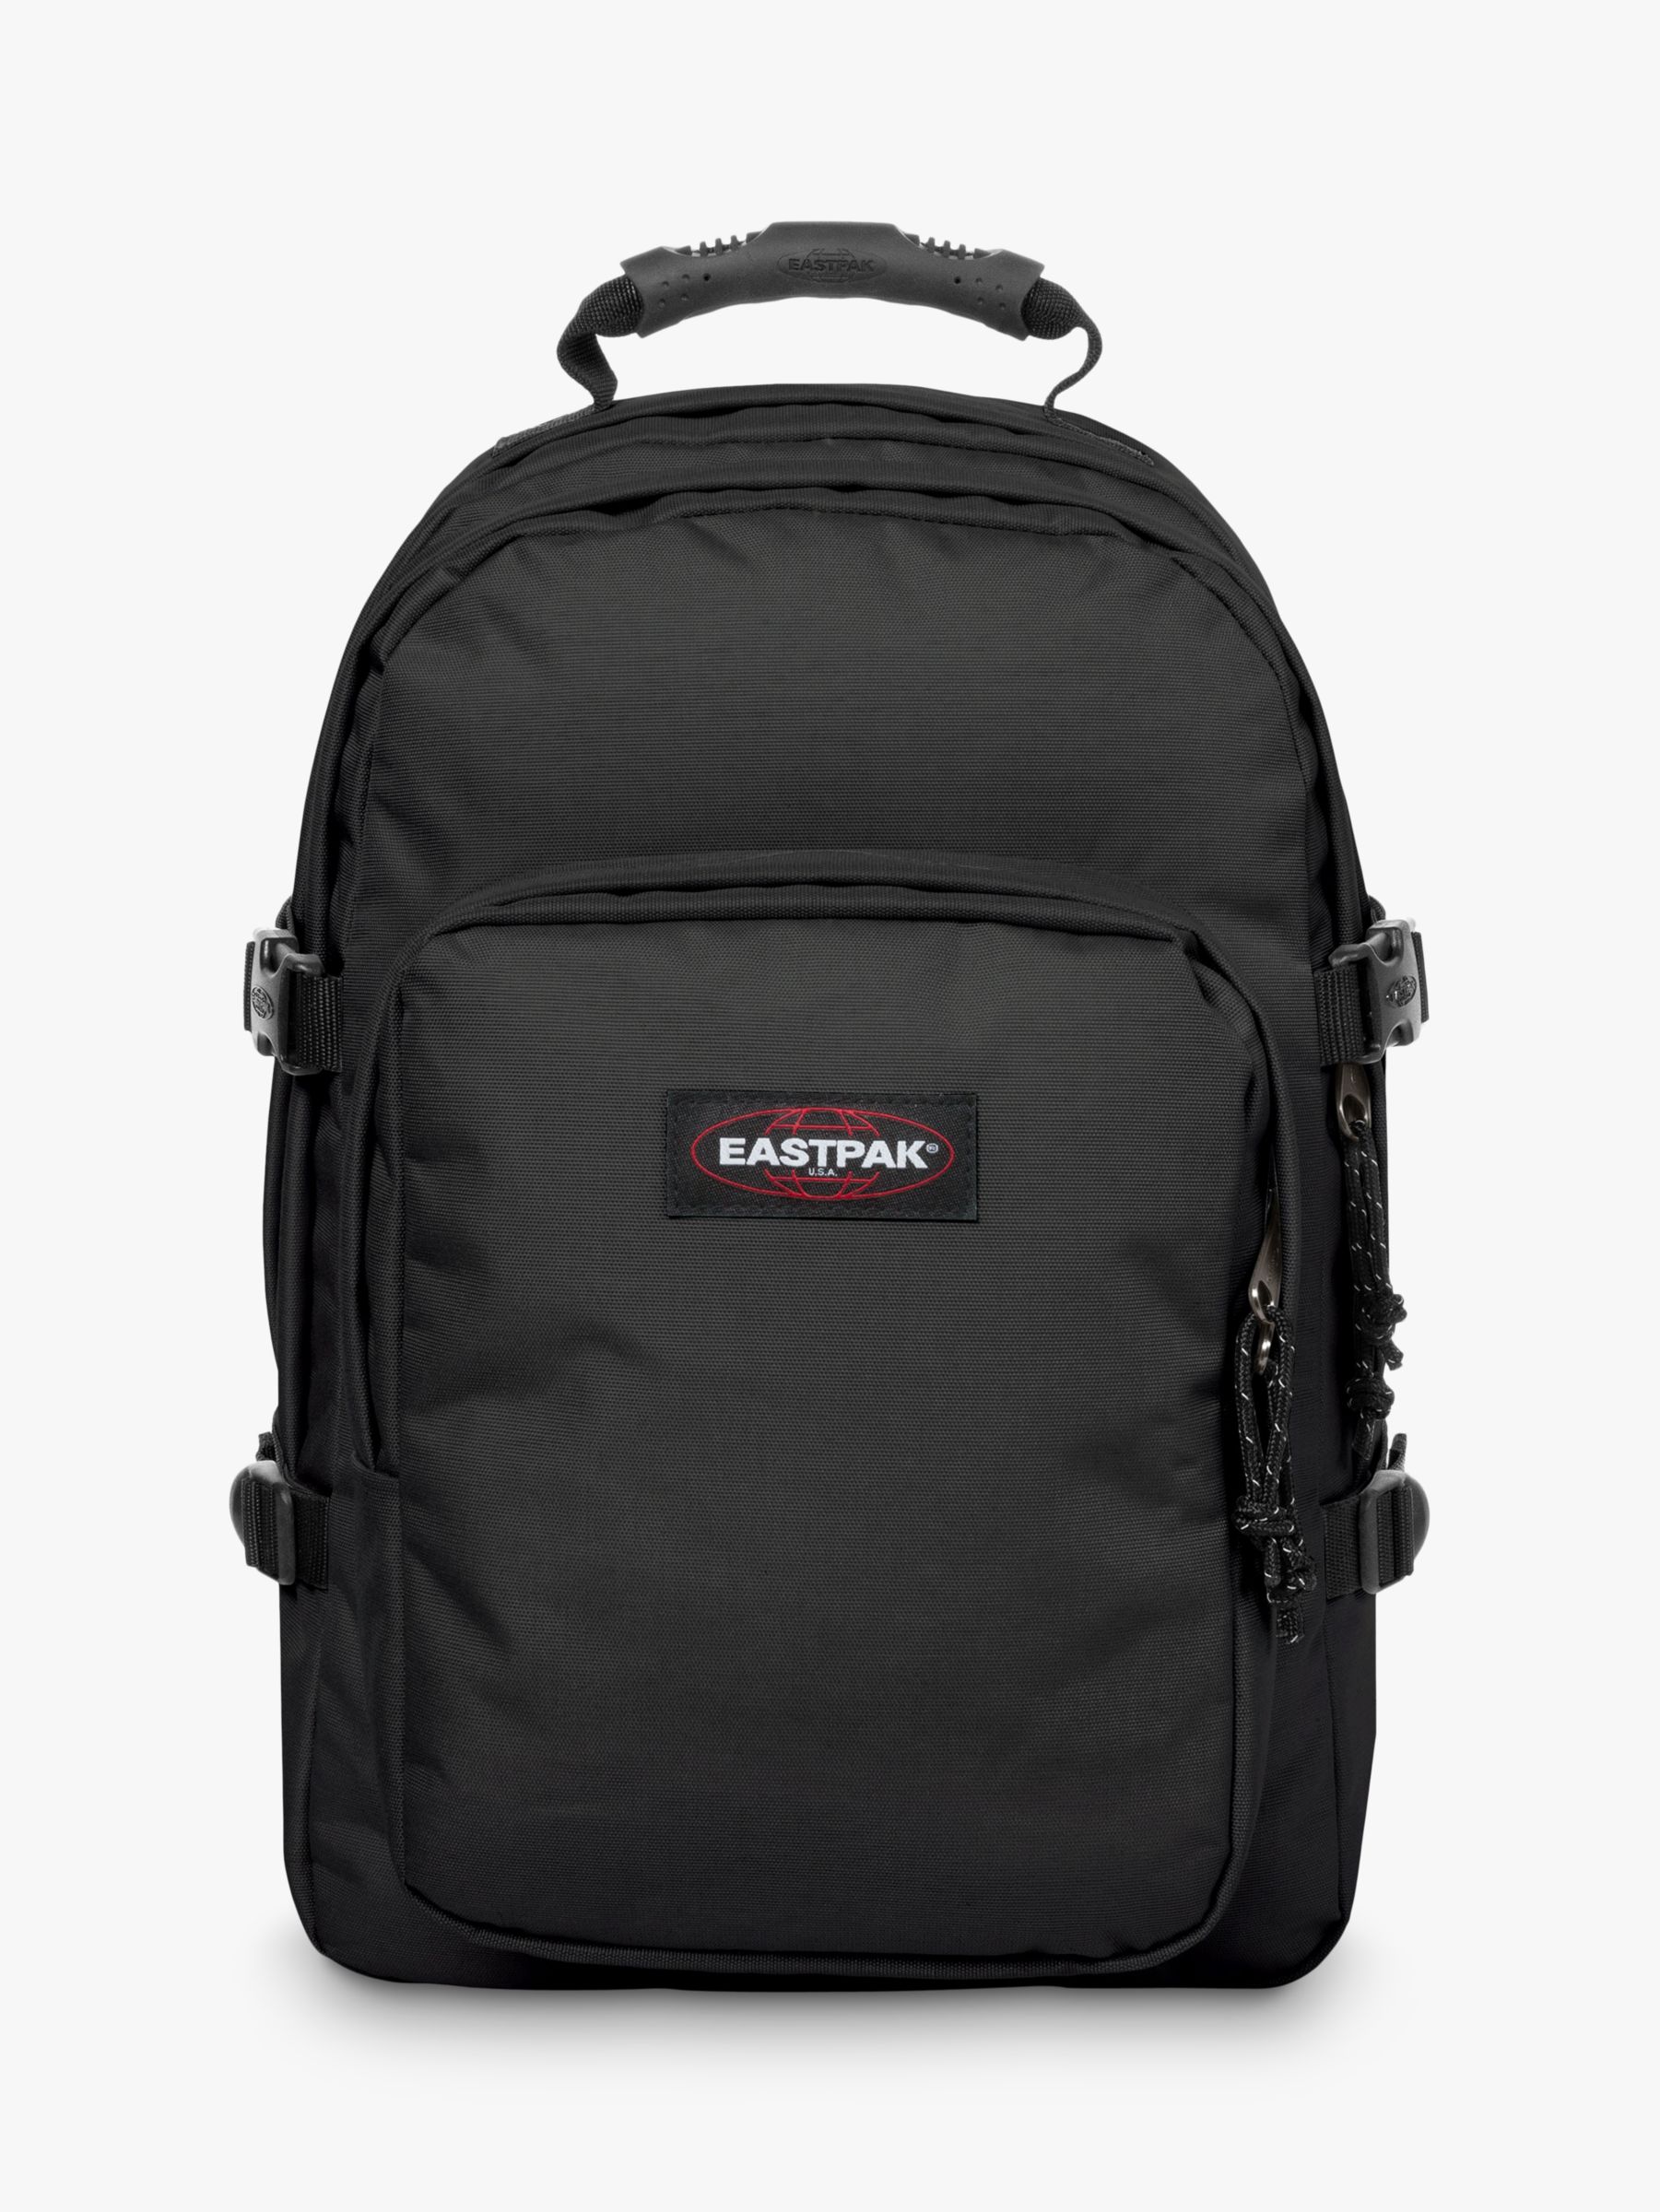 dynastie vervaldatum residu Eastpak Provider 15" Laptop Backpack, Black